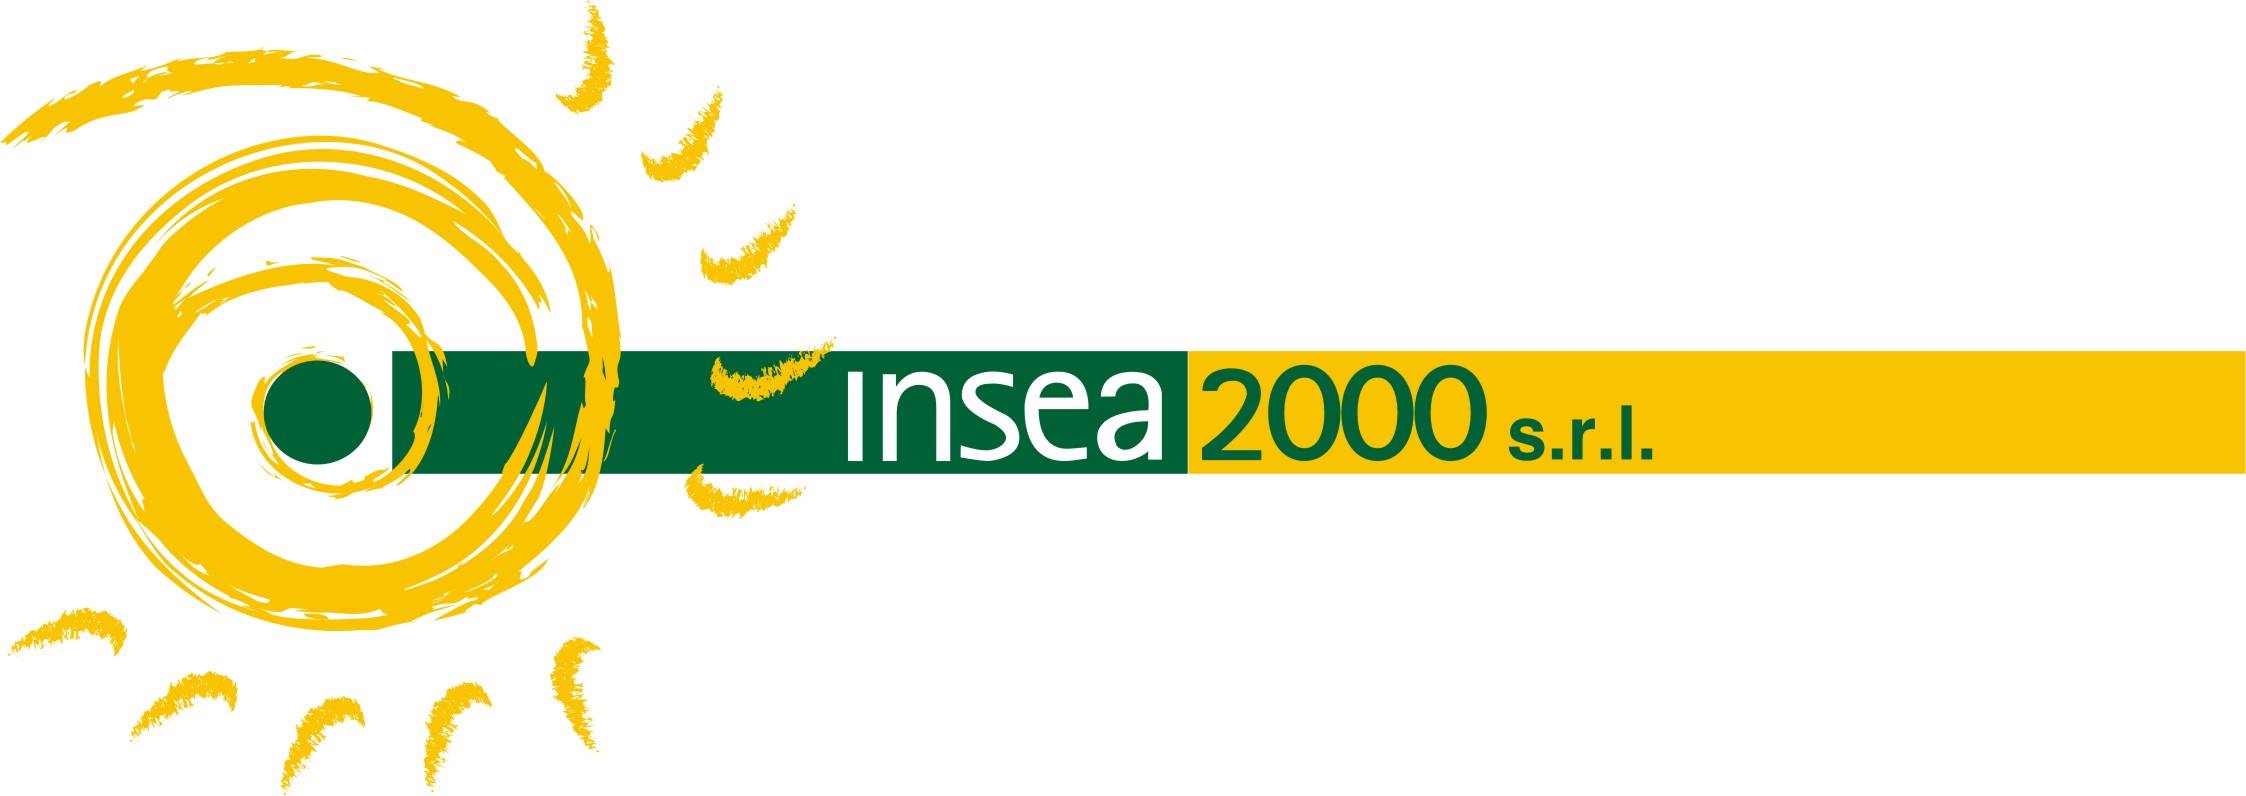 insea 2000